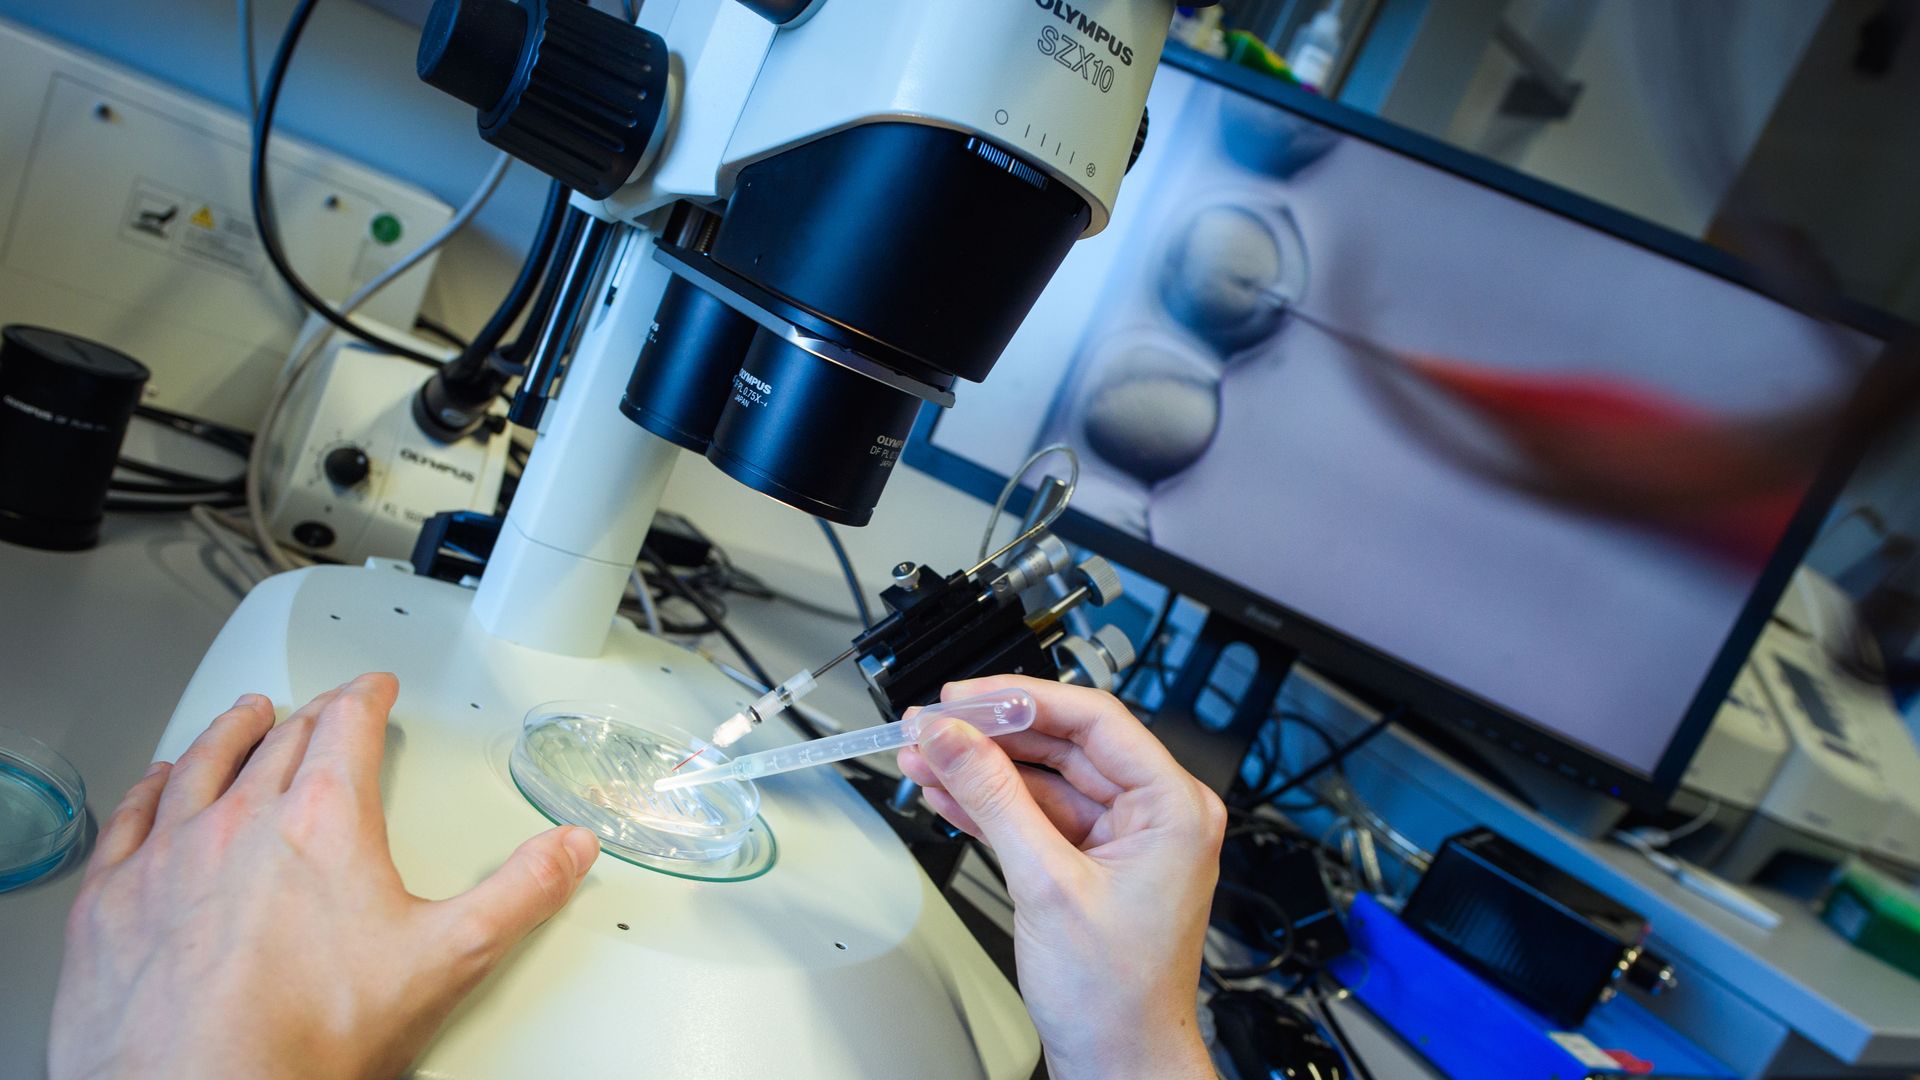 A researcher observes a CRISPR/Cas9 process through a stereomicroscope